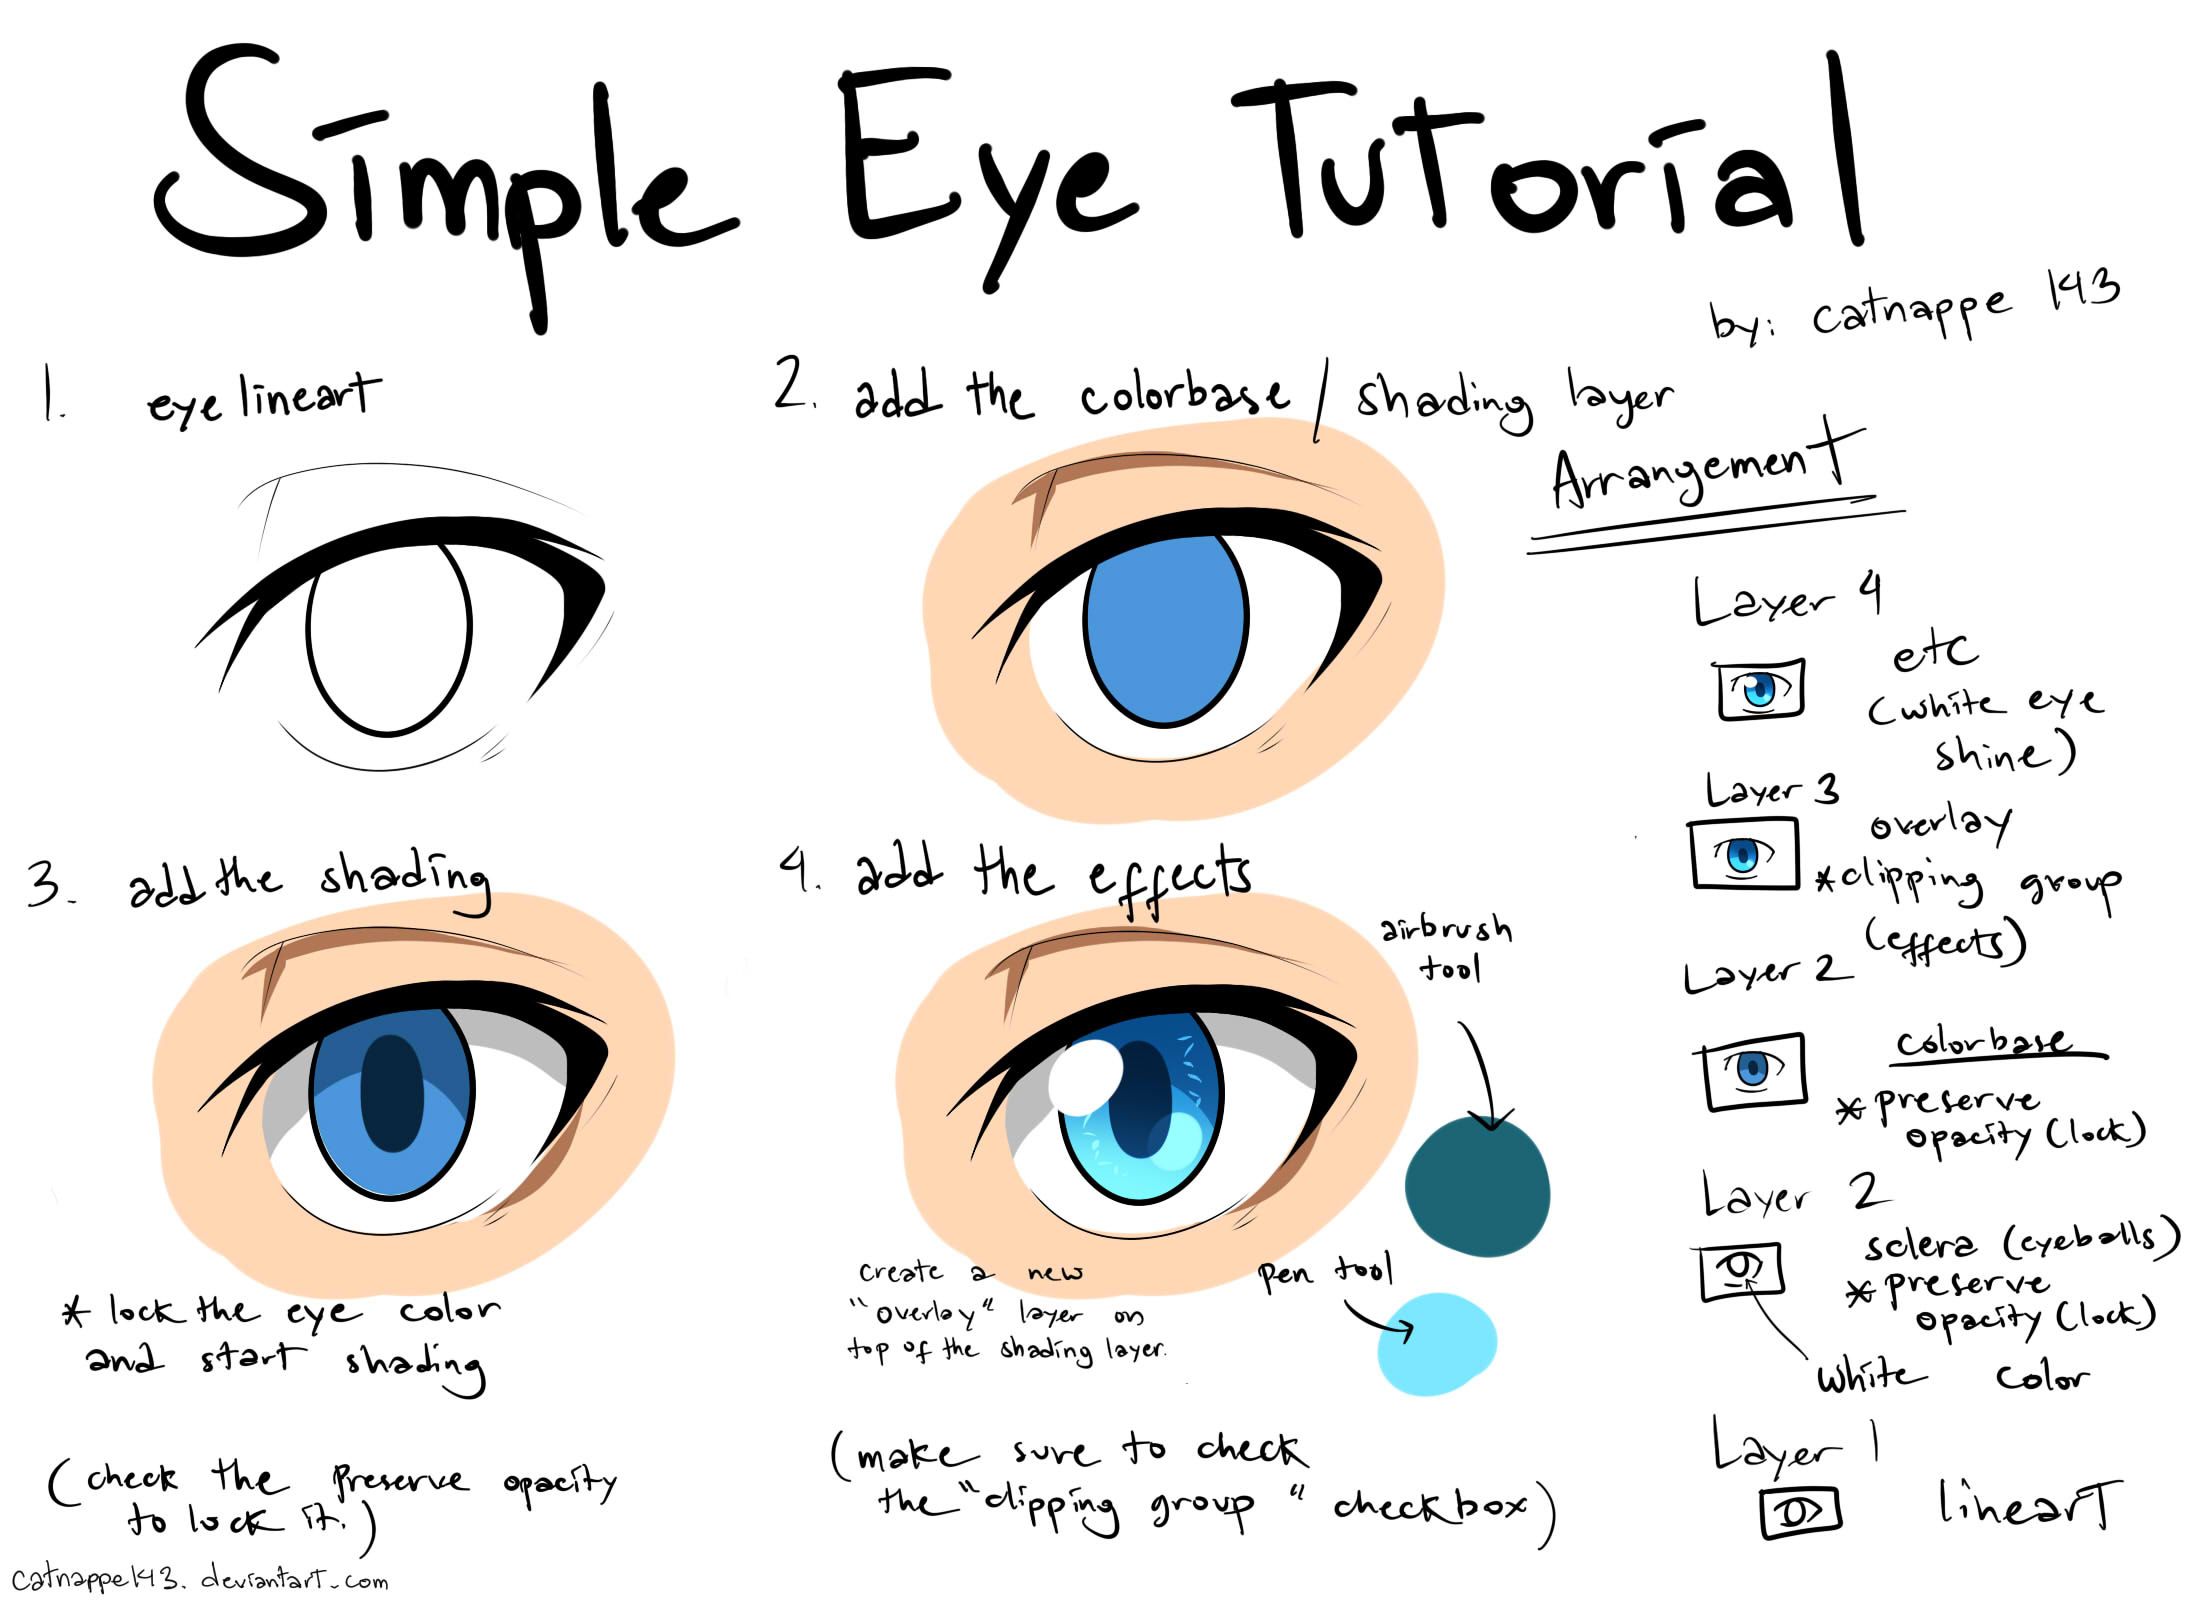 Simple Eye Tutorial by catnappe143 on DeviantArt